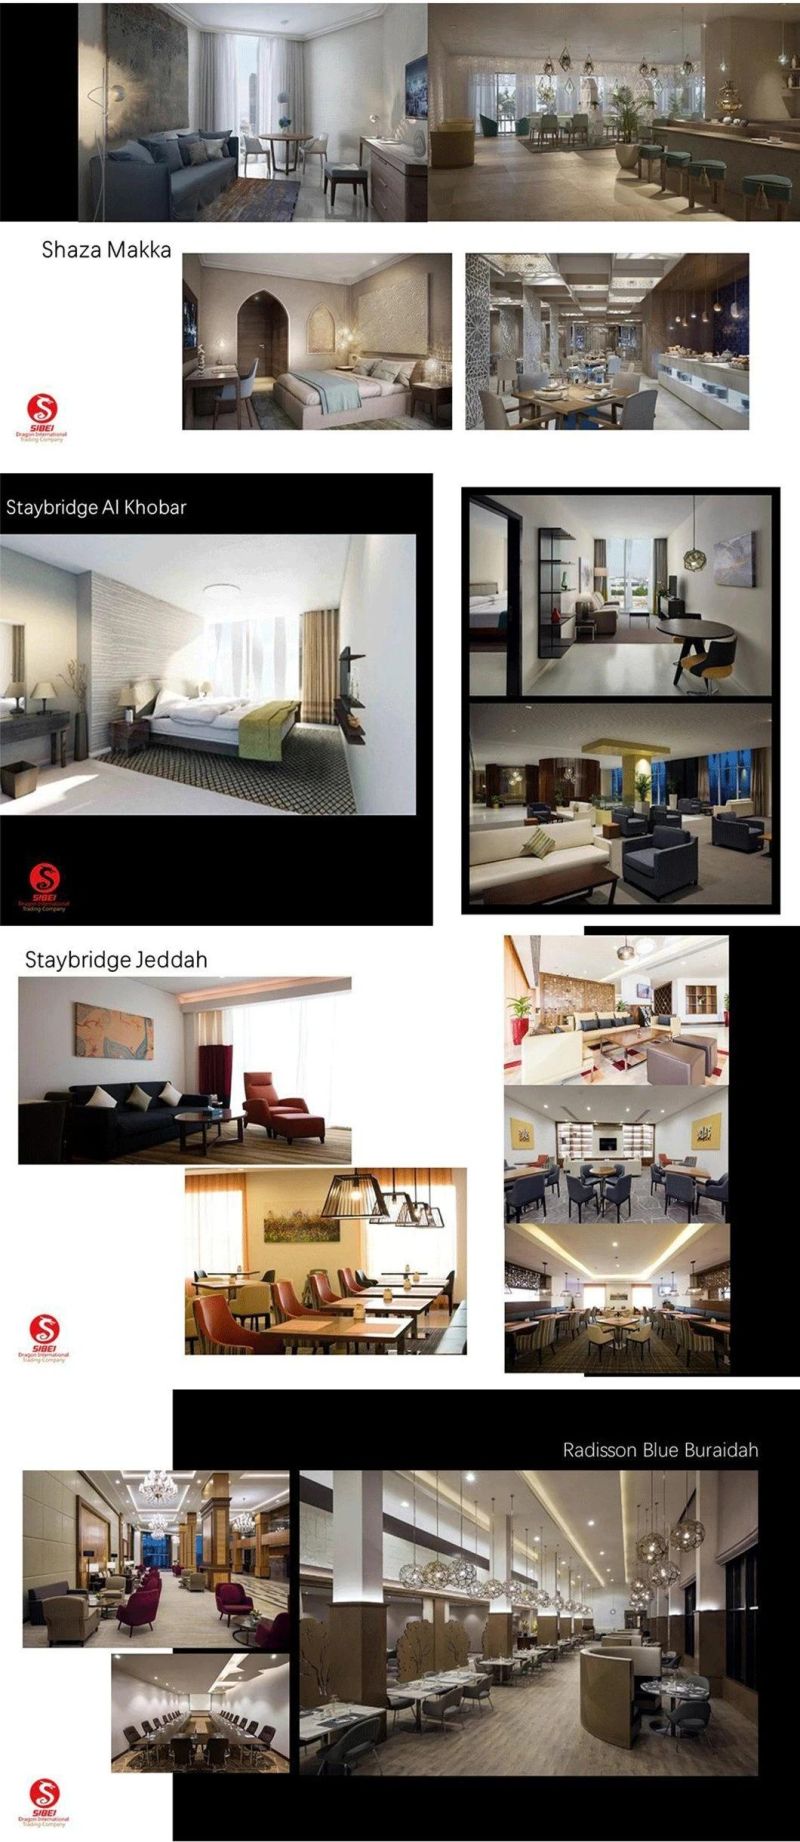 Wooden Luxury Bedroom Set 5 Star Villa Apartment Resort Room Hotel Bedroom Furniture Sets